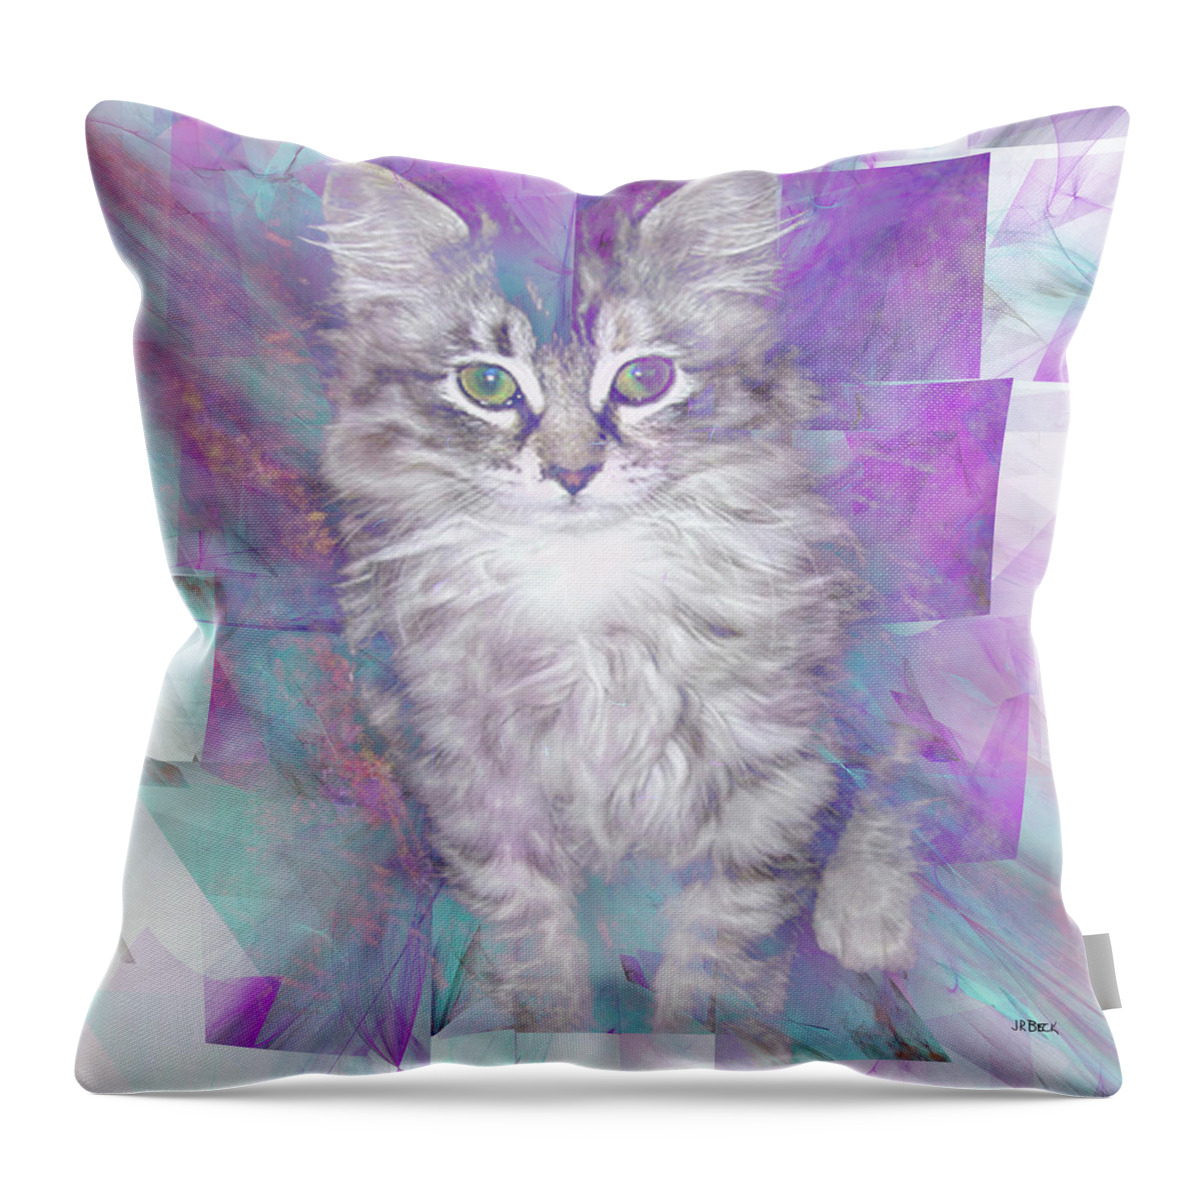 Cat Throw Pillow featuring the digital art Fur Ball - Square Version by Studio B Prints